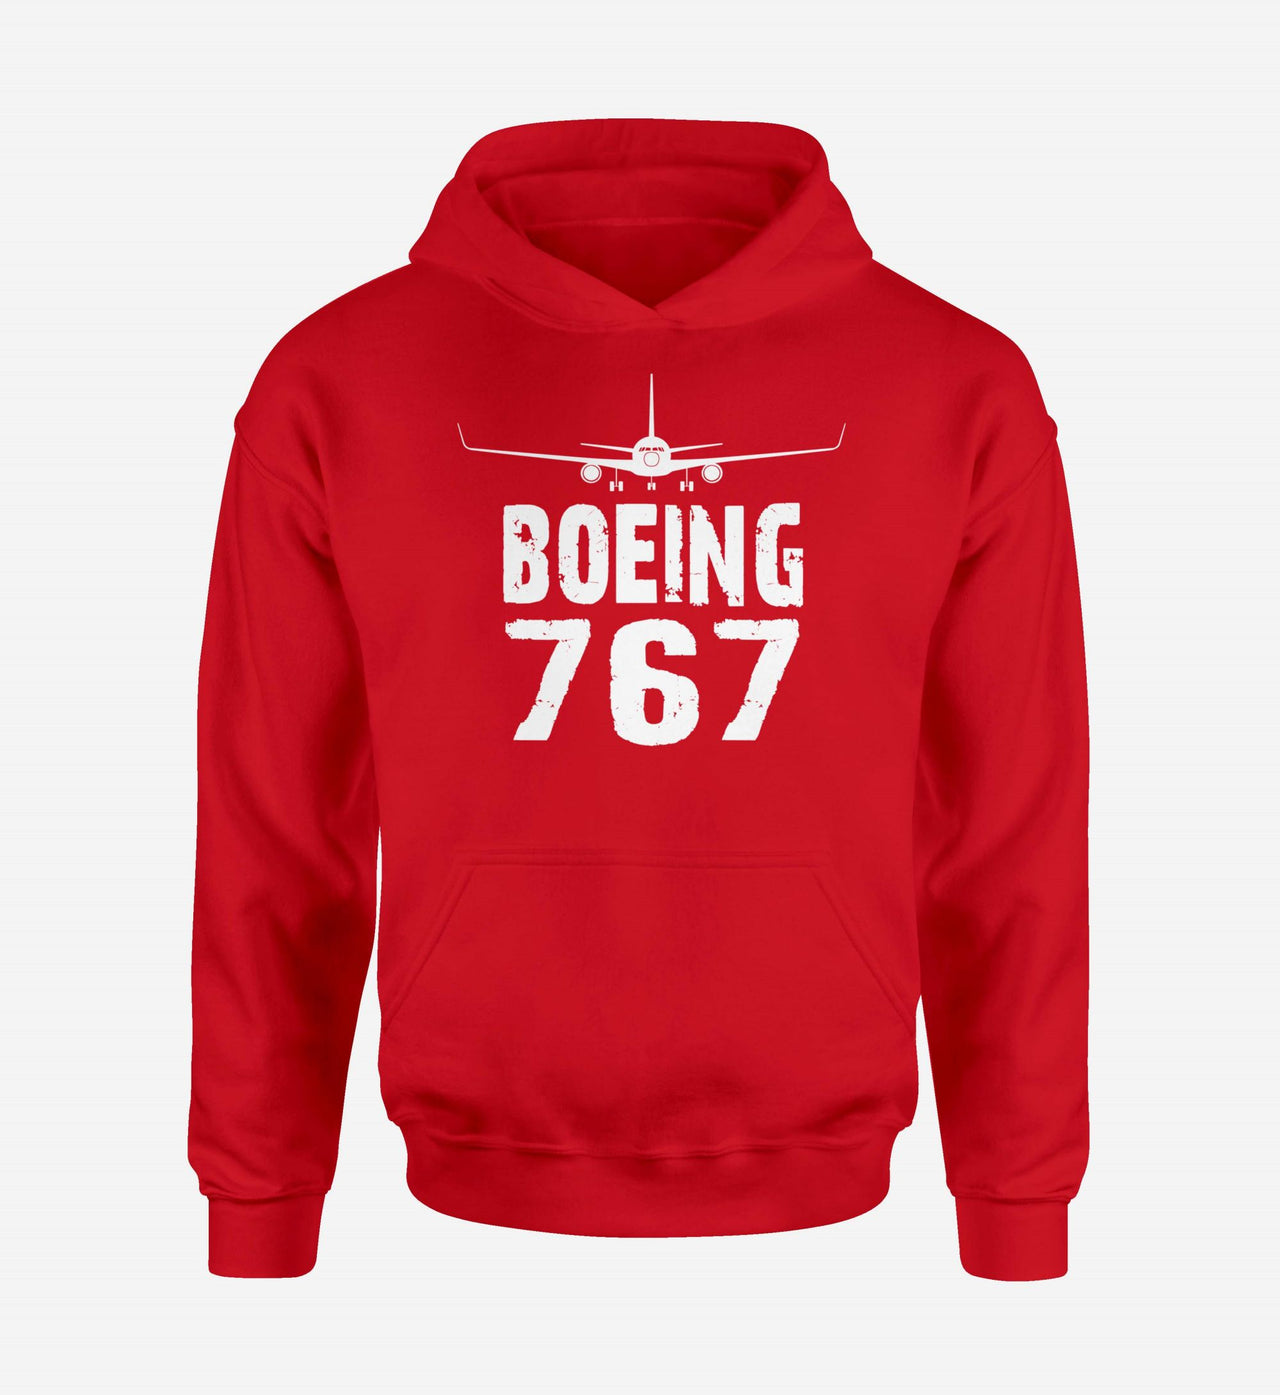 Boeing 767 & Plane Designed Hoodies